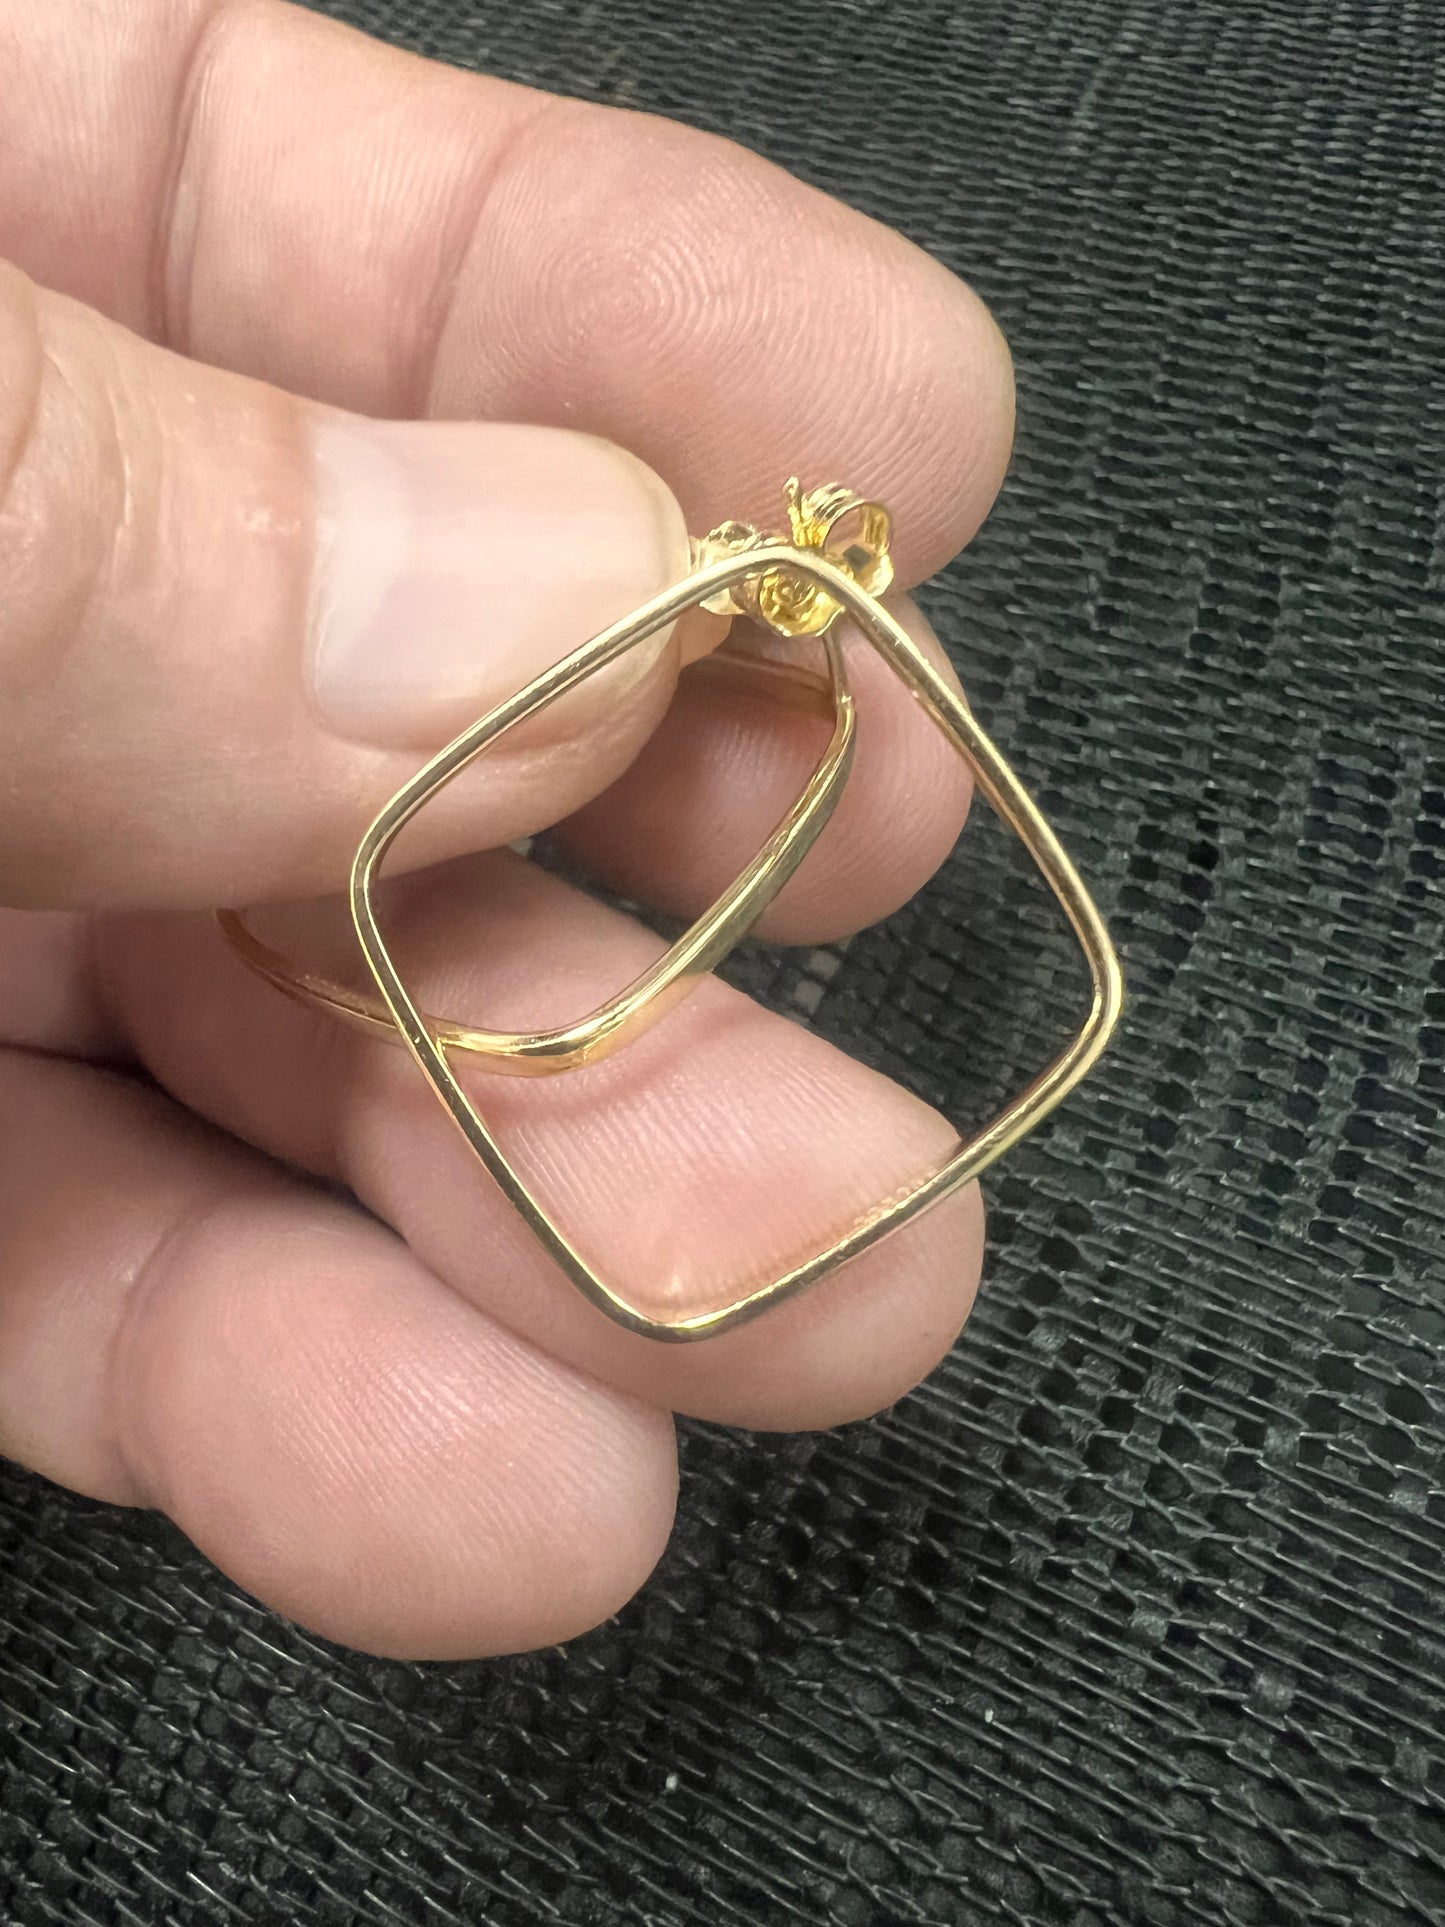 14K Yellow gold minimalist square studs earrings-11506